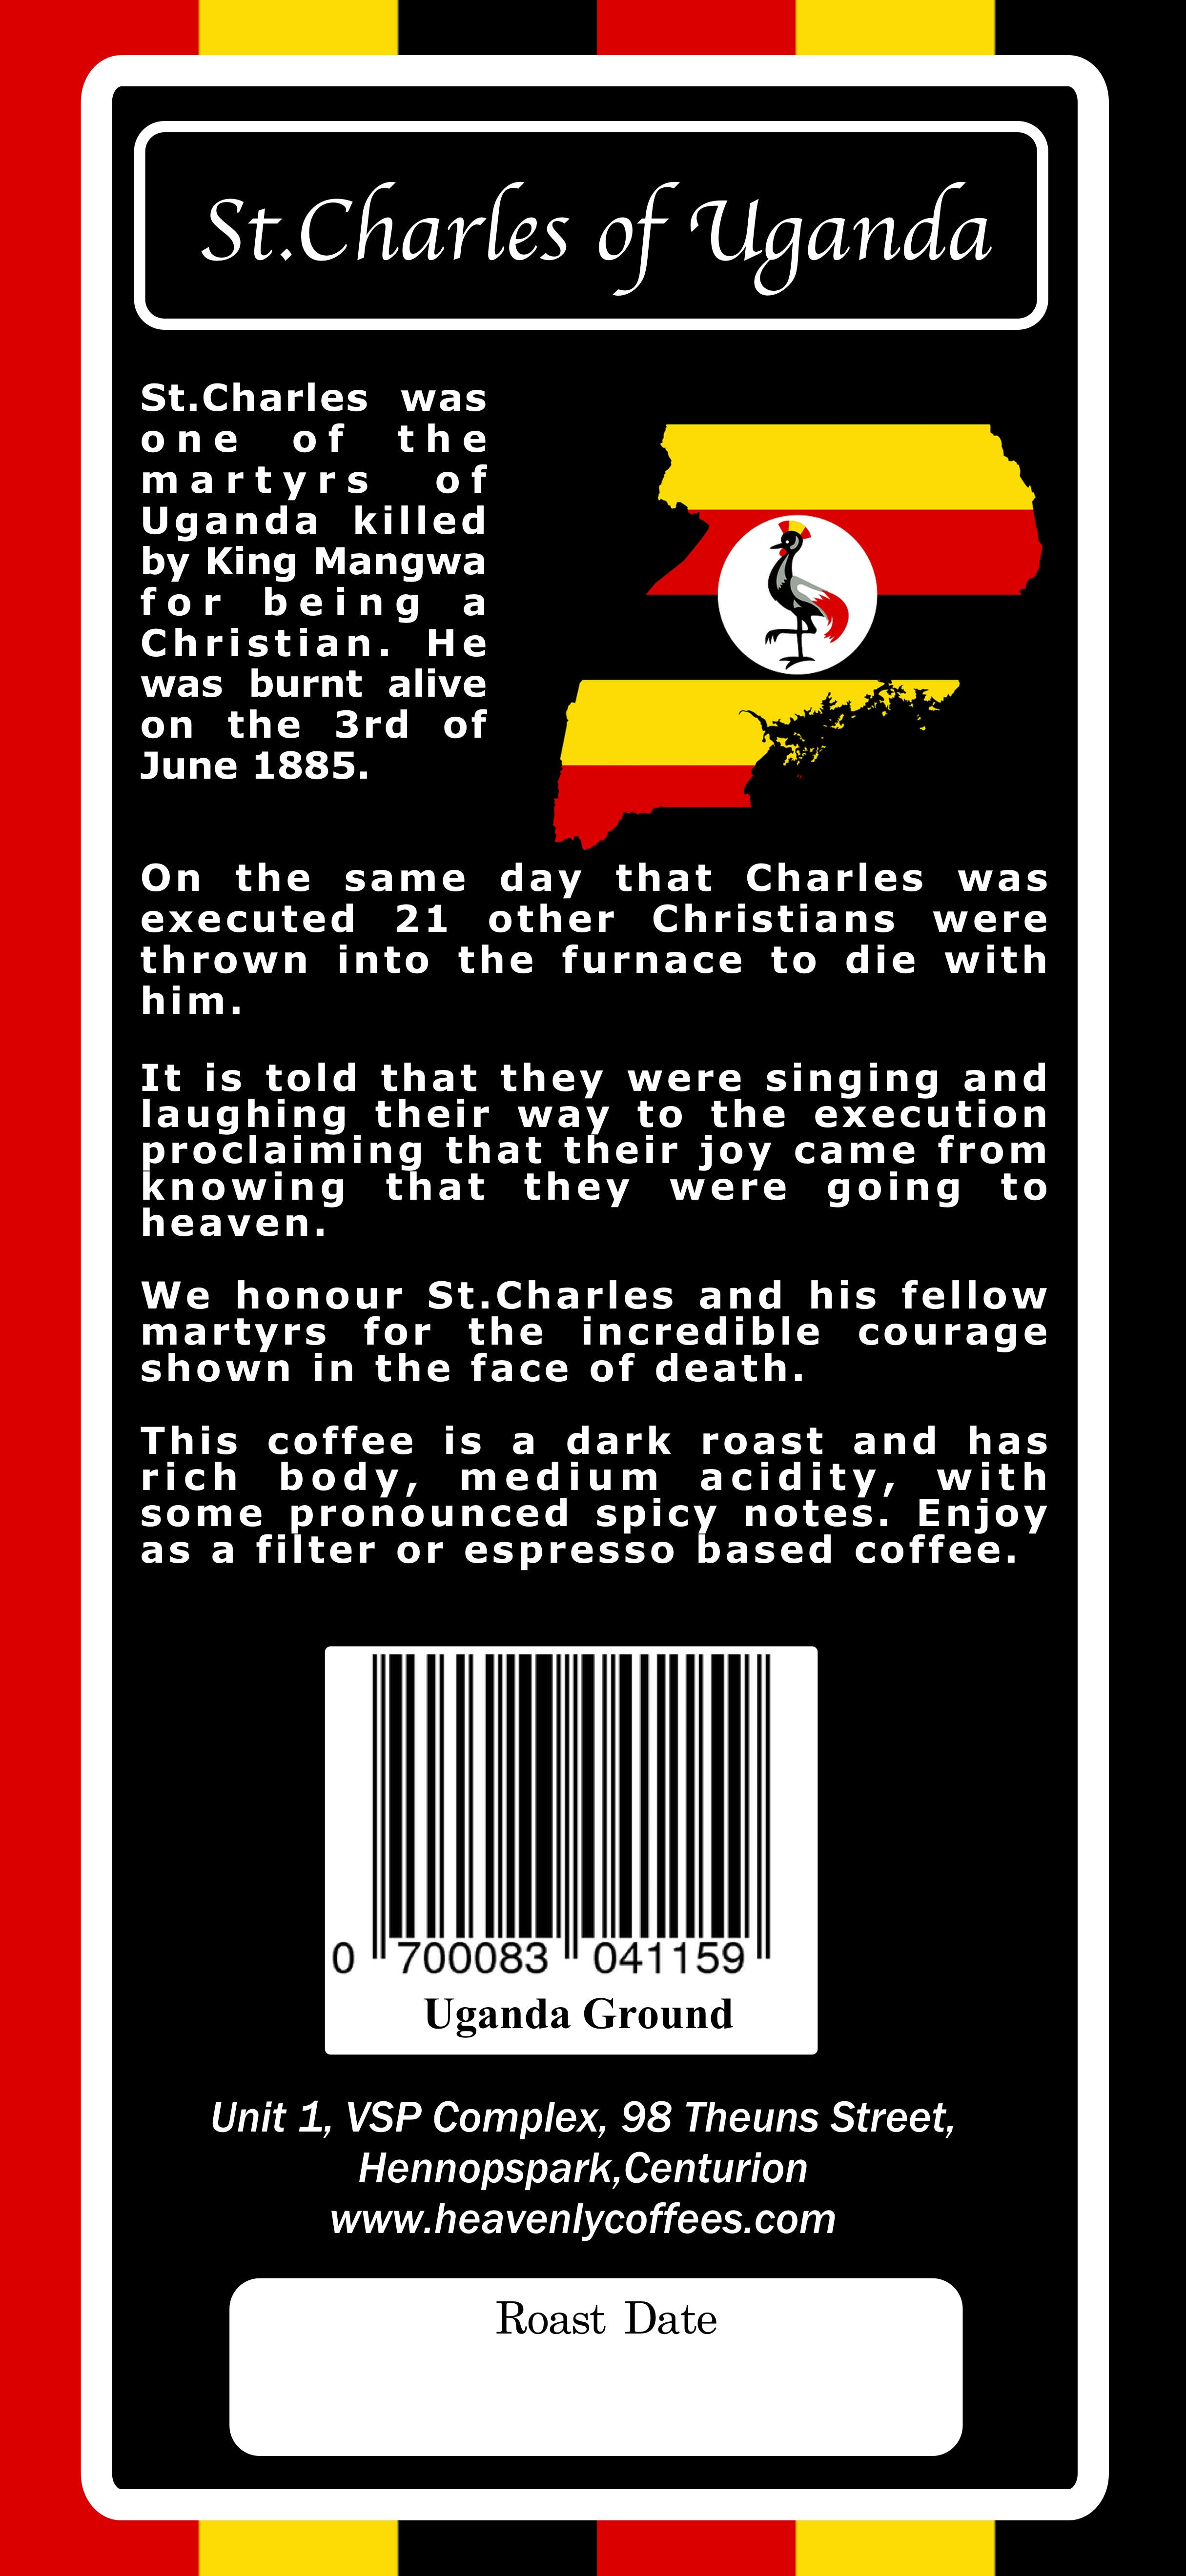 St.Charles of Uganda Coffee